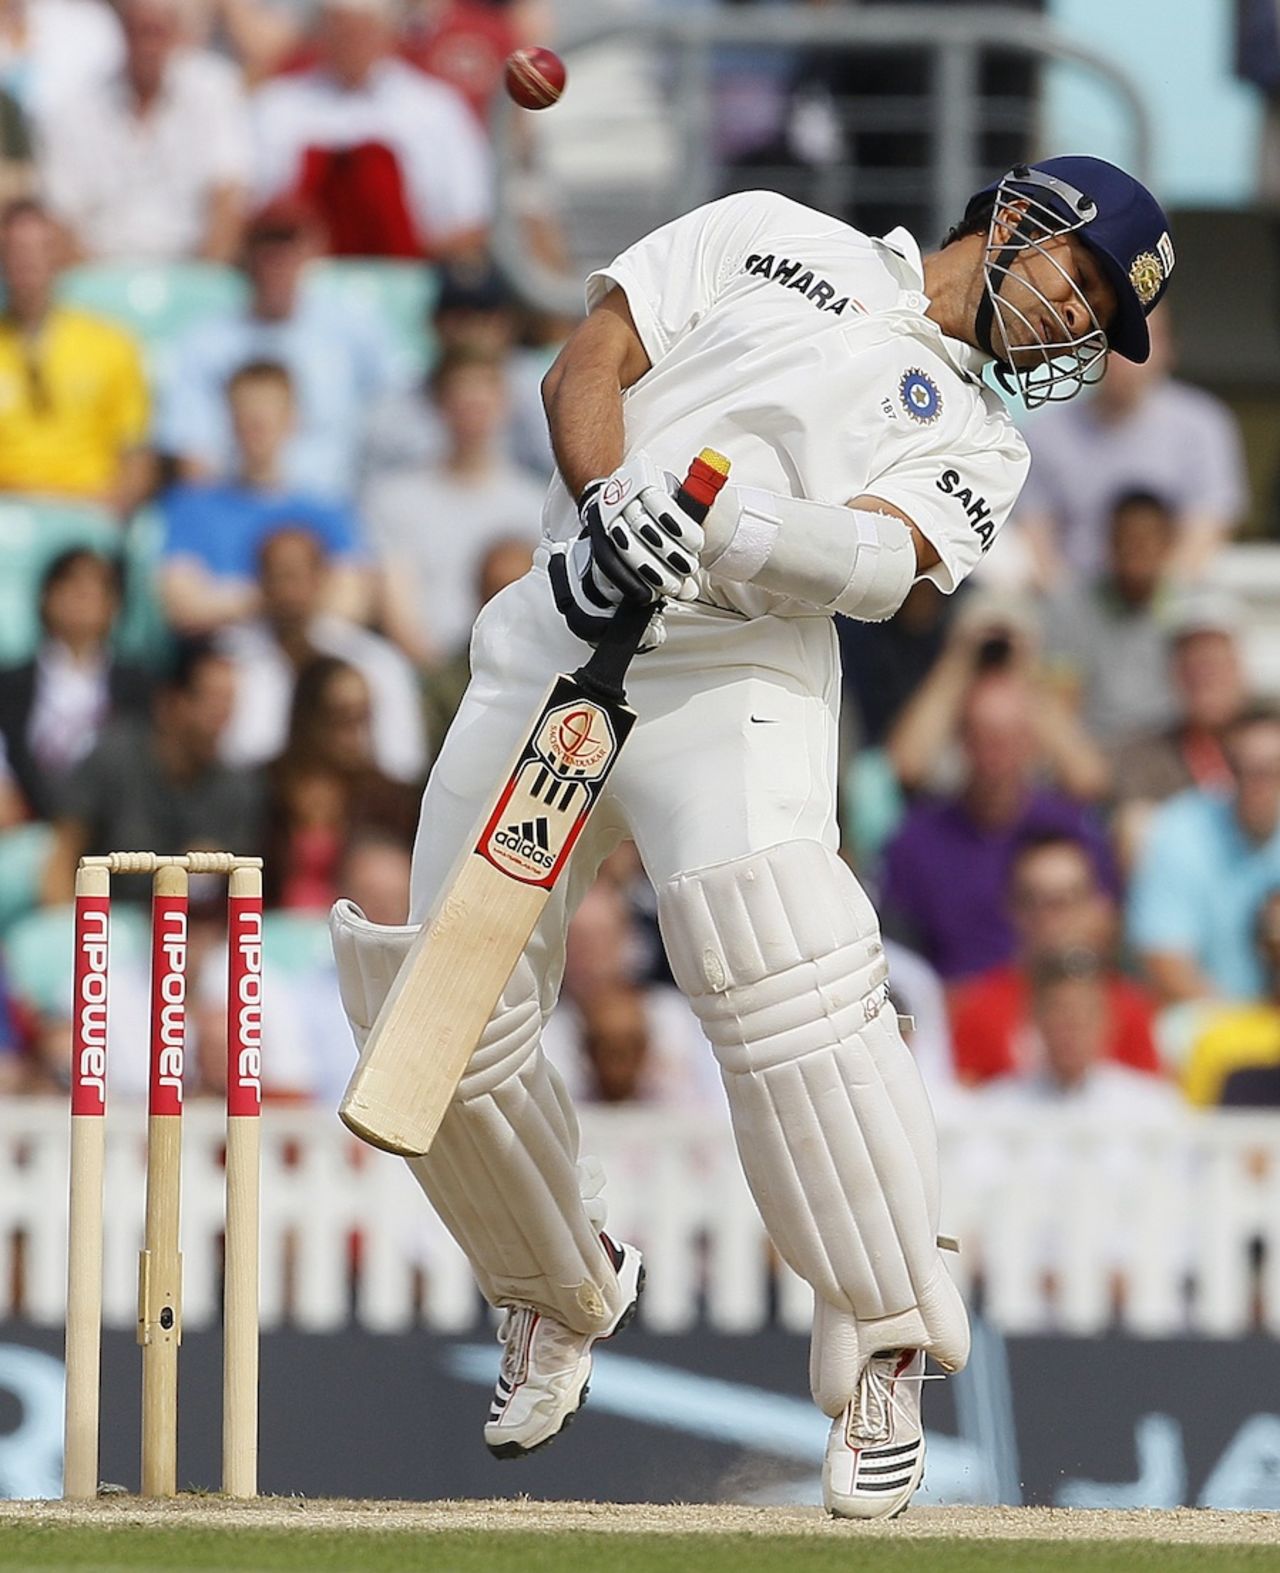 Sachin Tendulkar avoids a short ball, England v India, 4th Test, The Oval, 5th day, August 22, 2011